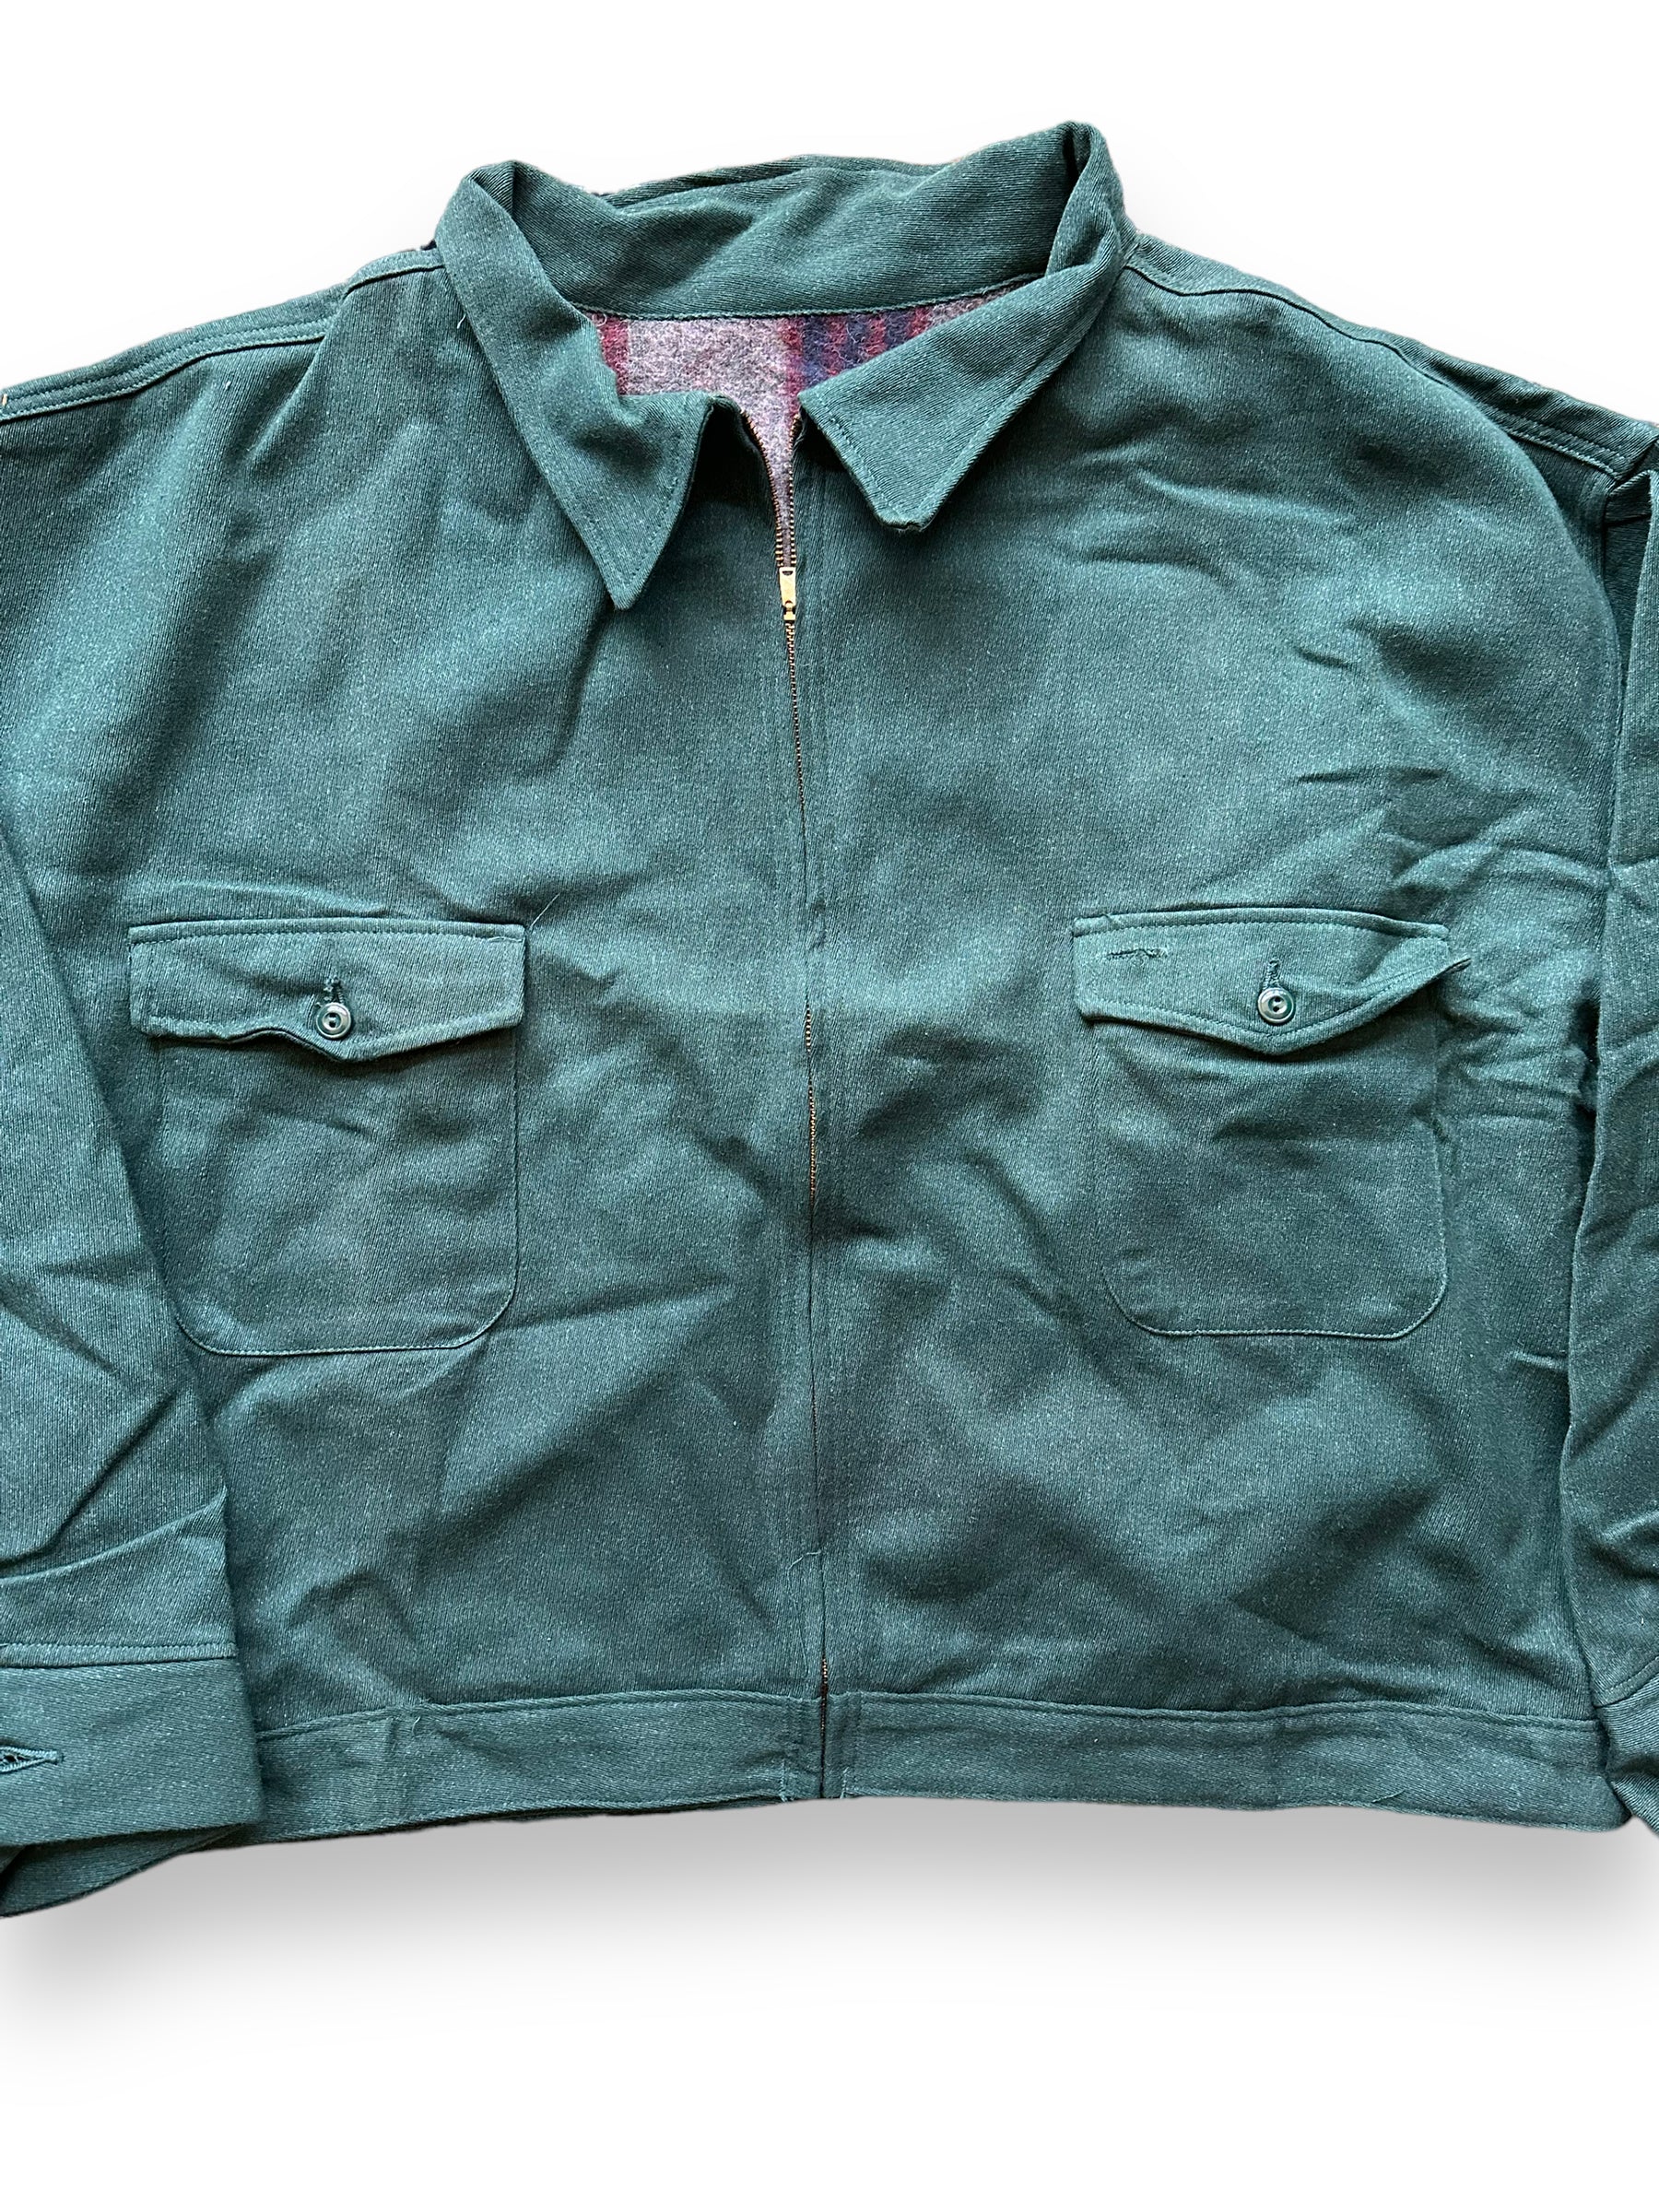 Front Detail on Vintage Green Blanket Lined Gas Station Jacket SZ 56 | Vintage Workwear Jacket Seattle | Seattle Vintage Clothing